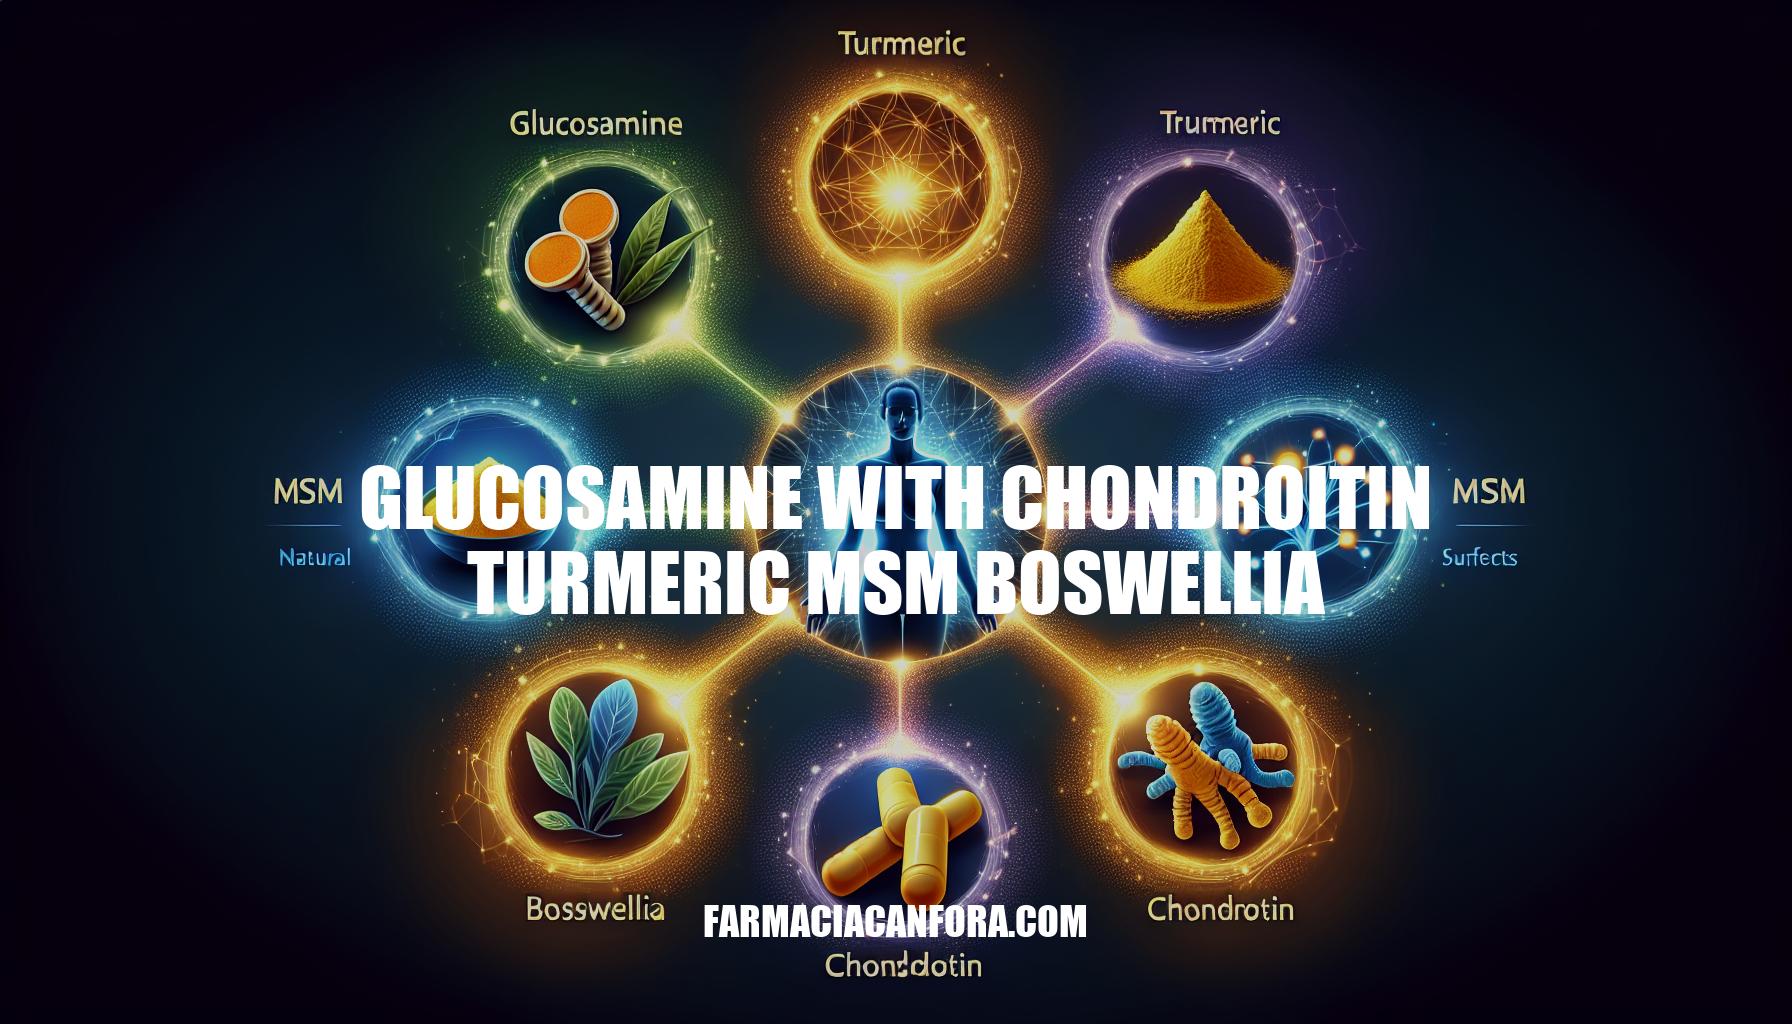 Benefits of Glucosamine with Chondroitin Turmeric MSM Boswellia